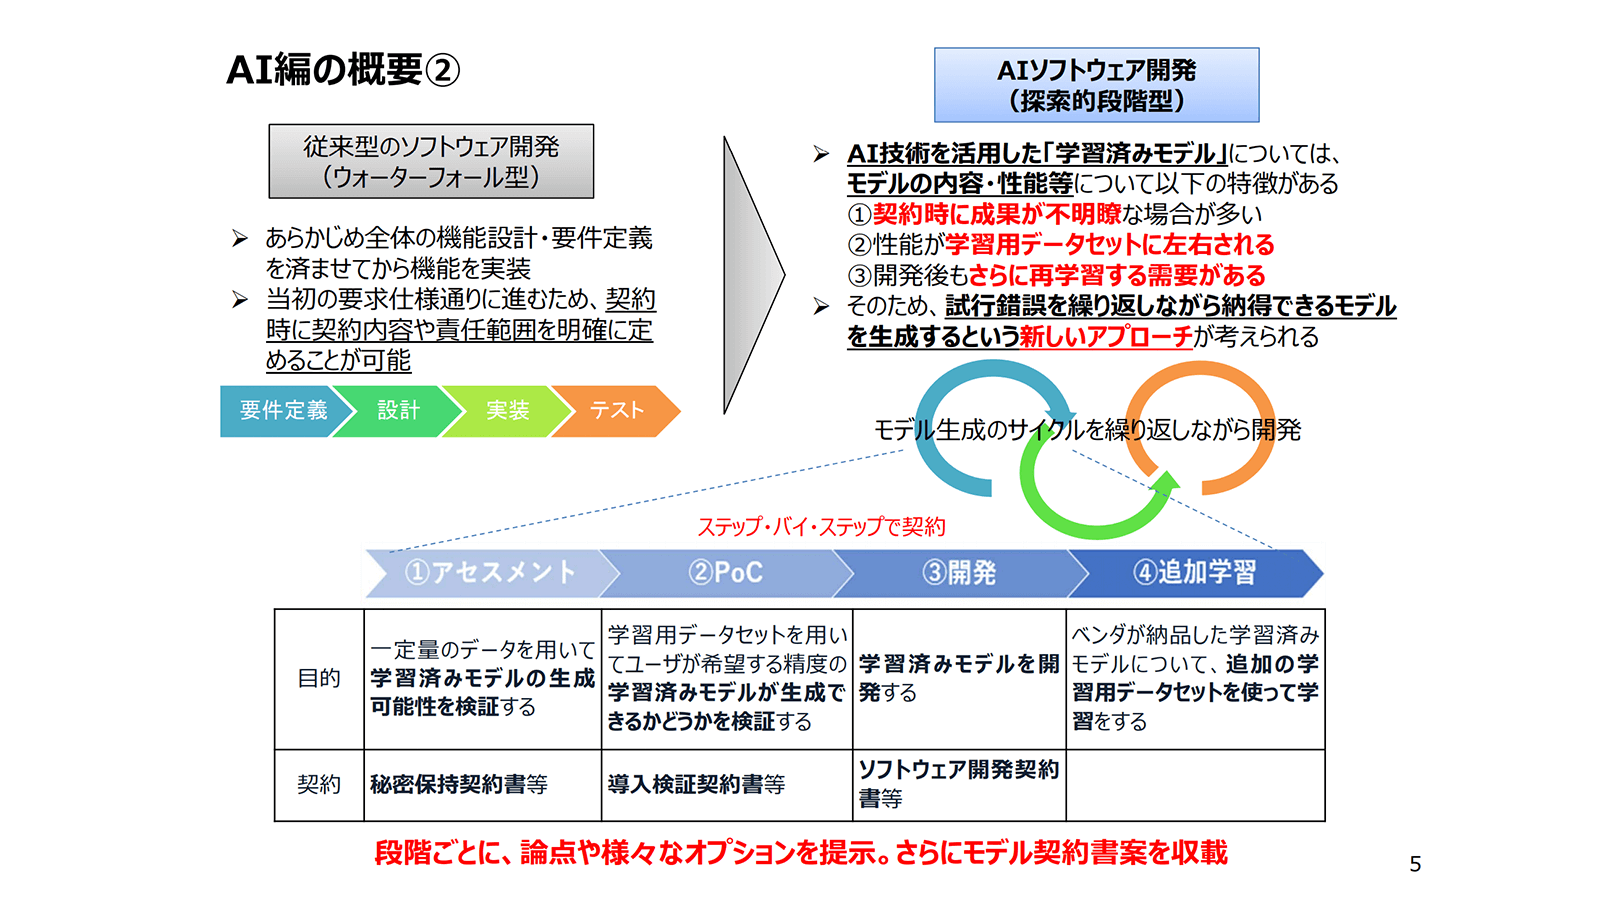 https://www.meti.go.jp/press/2018/06/20180615001/20180615001-4.pdf AI・データ契約ガイドライン概要 P5